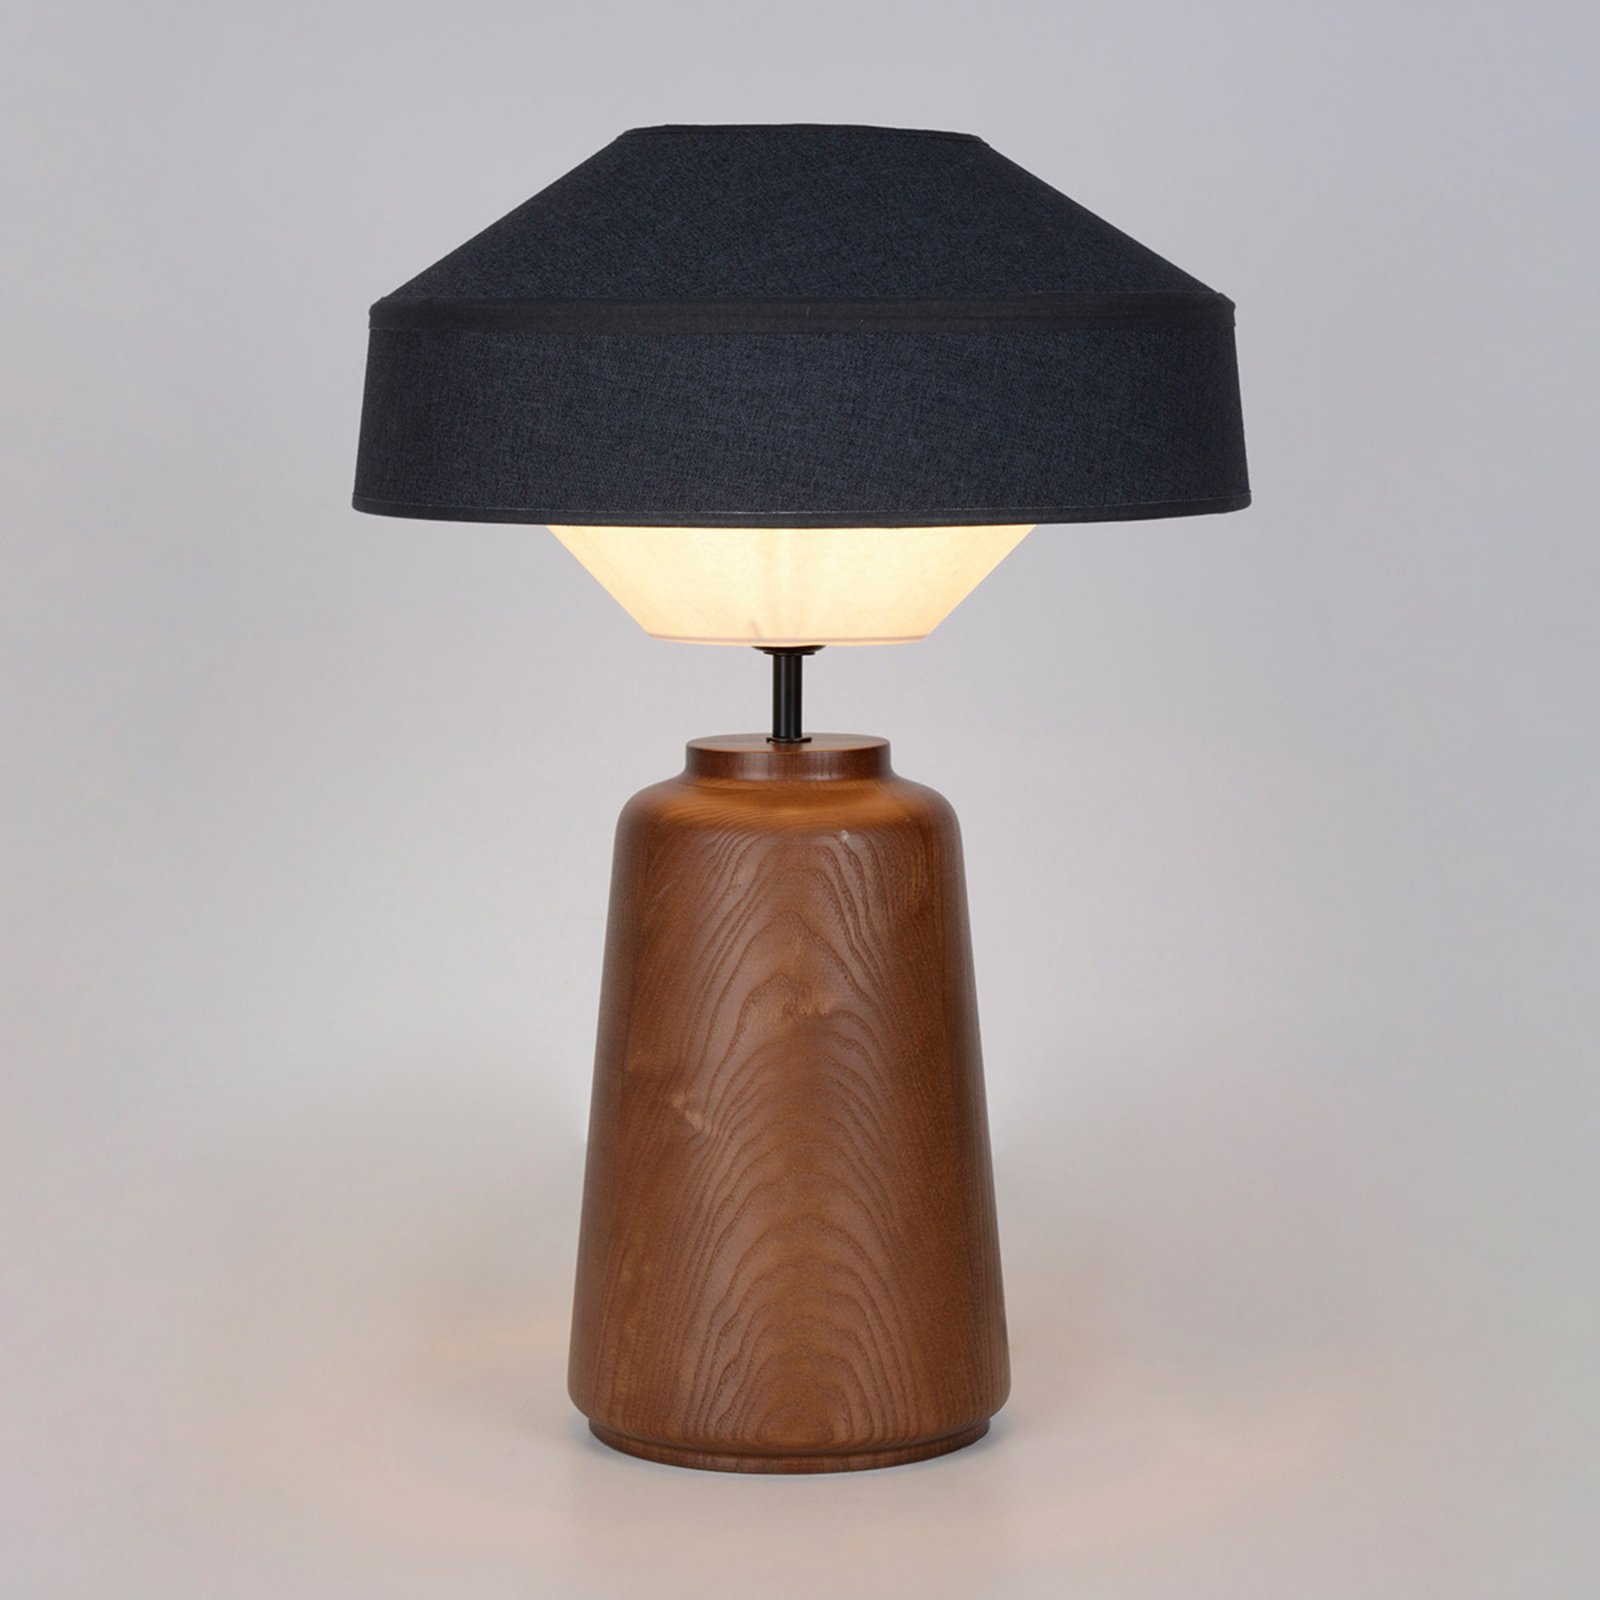 MARKET SET Mokuzaï table lamp suna, height 55 cm